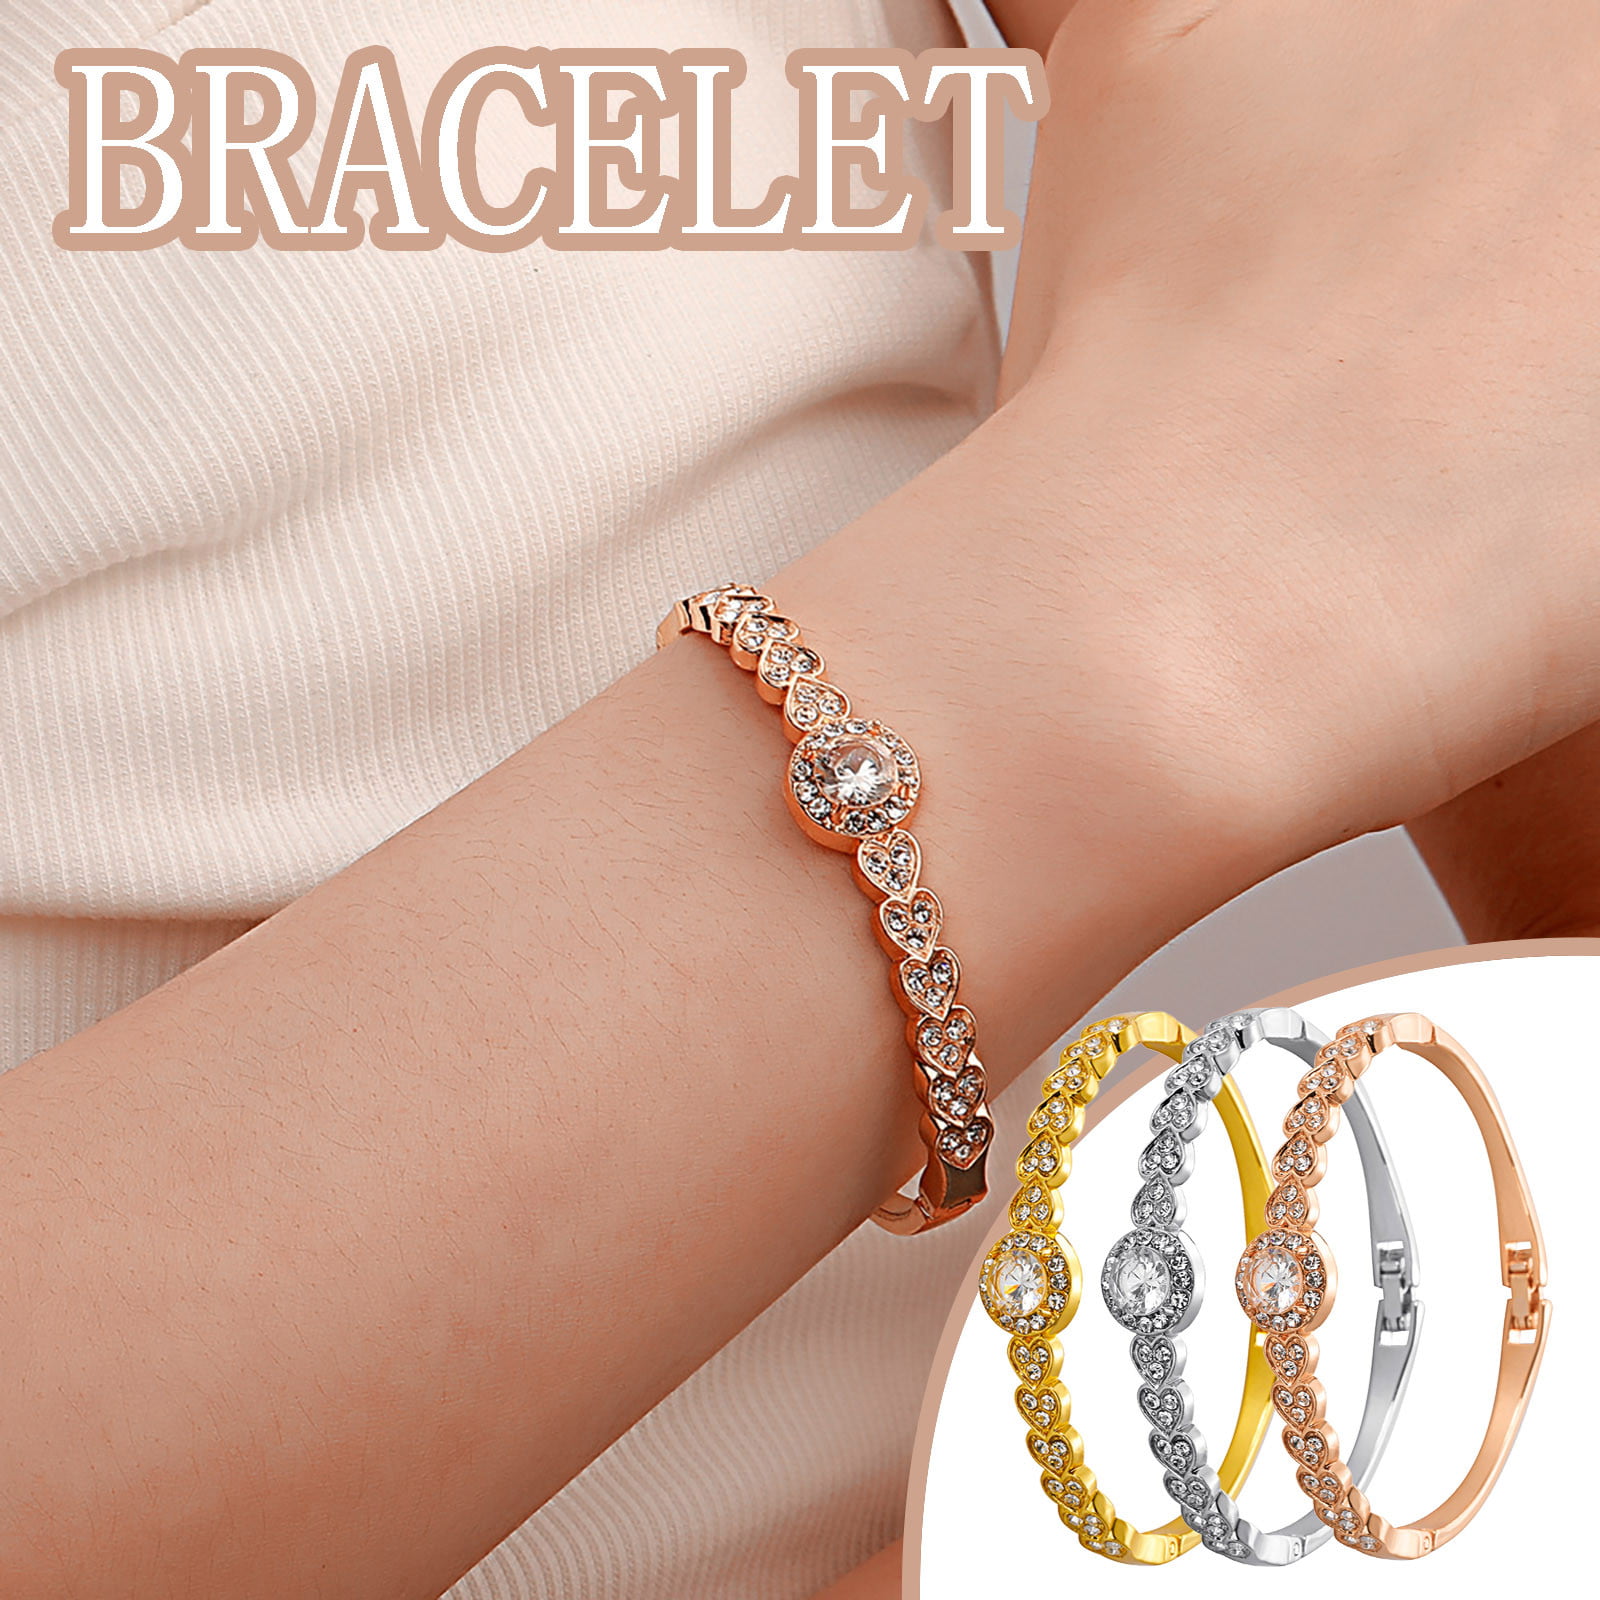 Details about   3 Ct Princess Cut Emerald & Diamond Bangle Bracelet 14K Yellow Gold Finish 